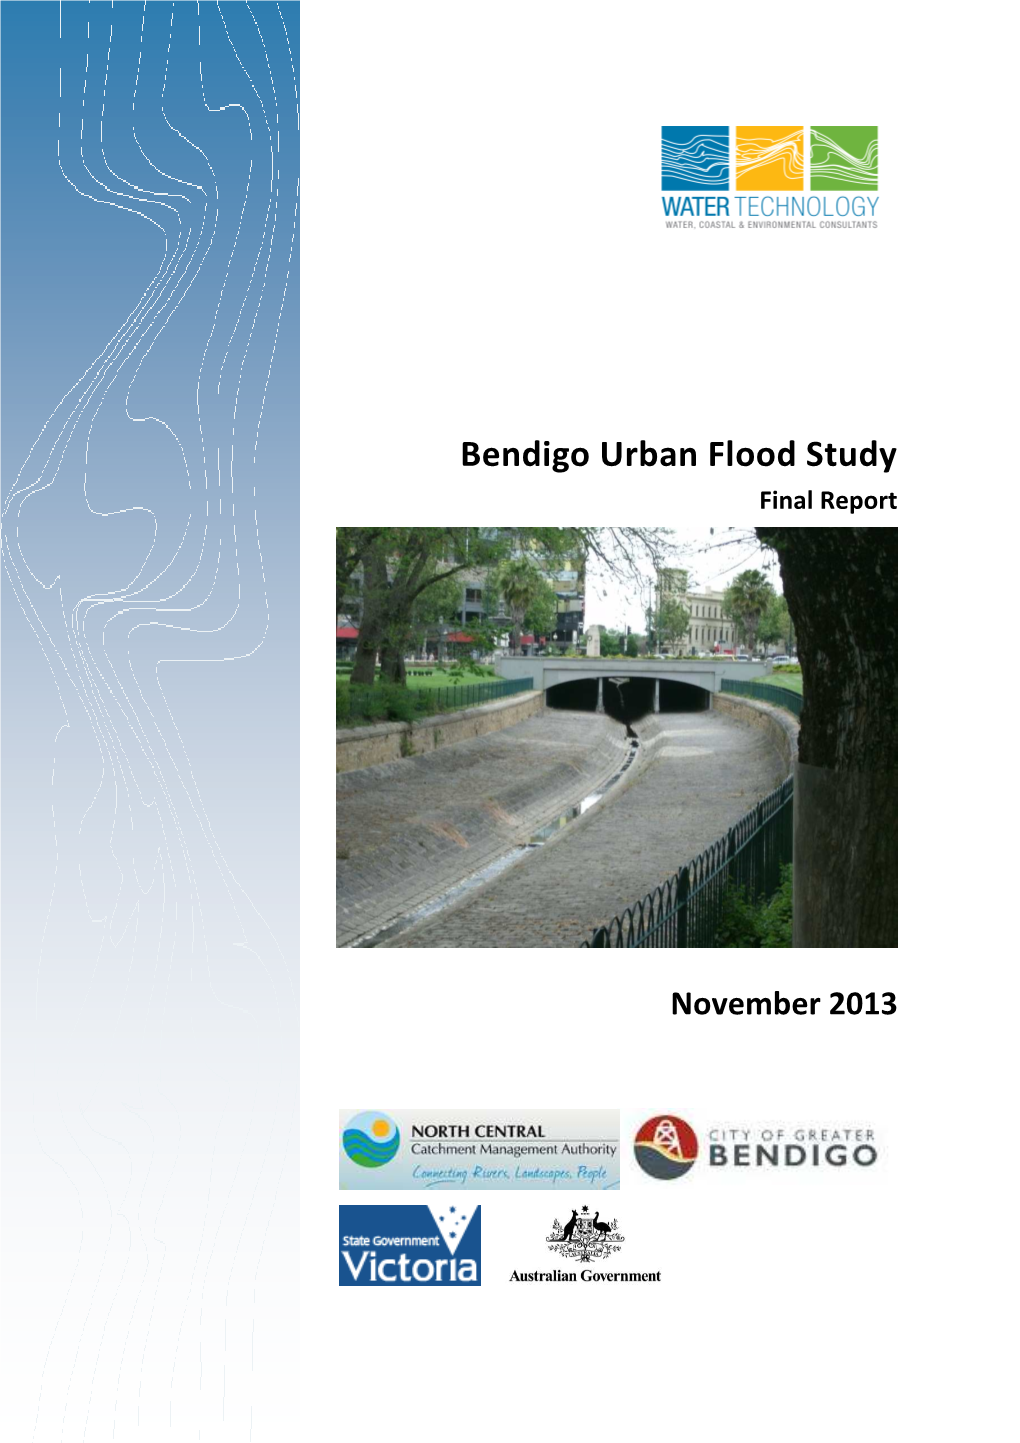 Bendigo Urban Flood Study Final Report